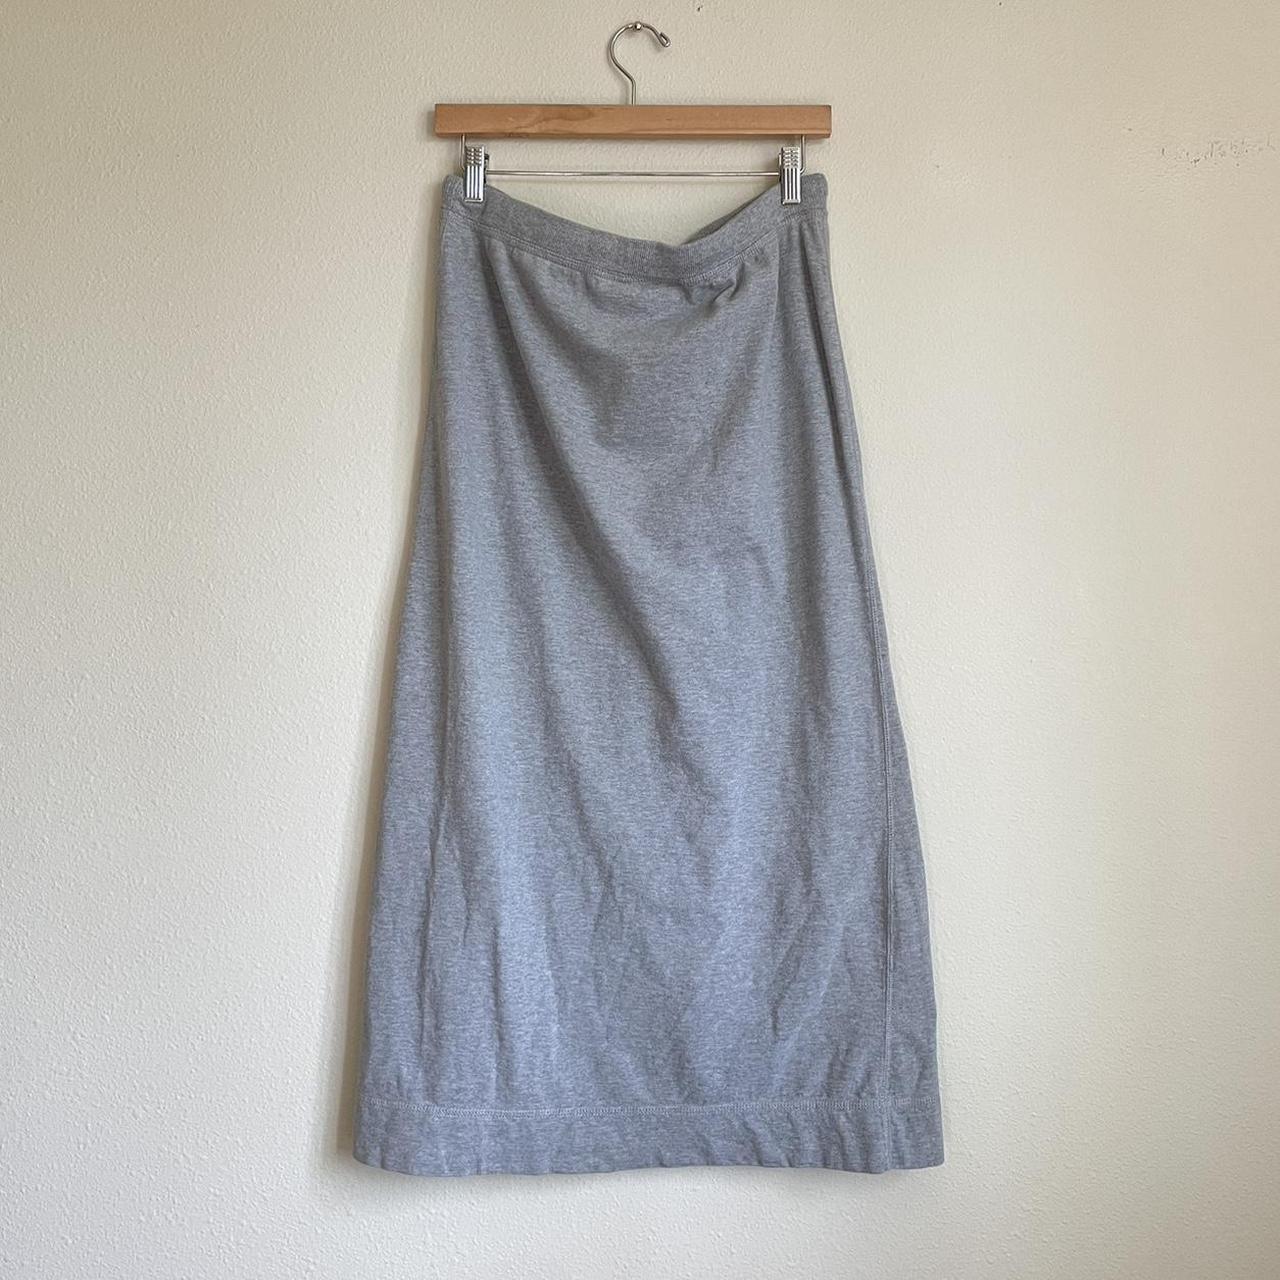 Liz Claiborne Women's Grey Skirt | Depop